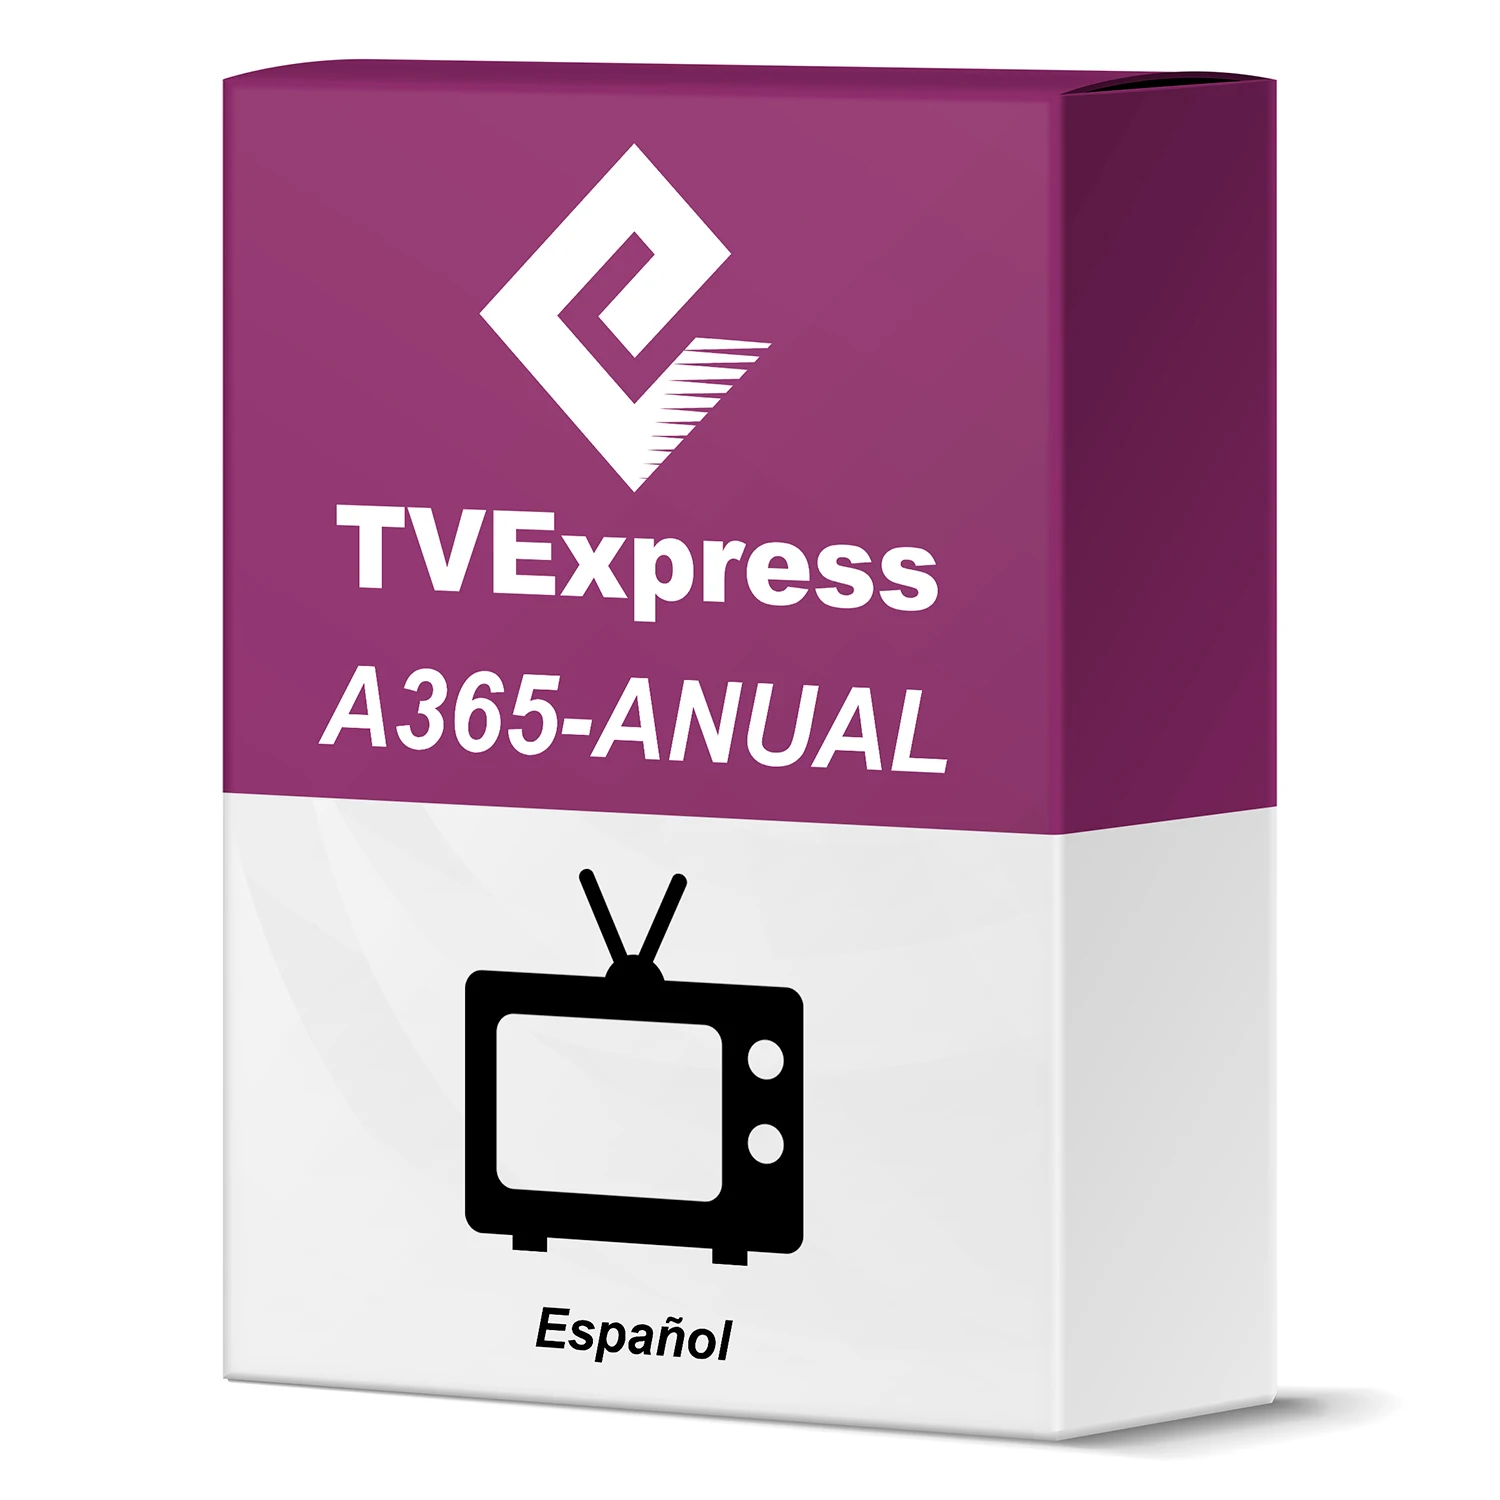 

TVE Mexico Yearly tvexpress m3u iptv gift card Spanish smart tv box android set top box